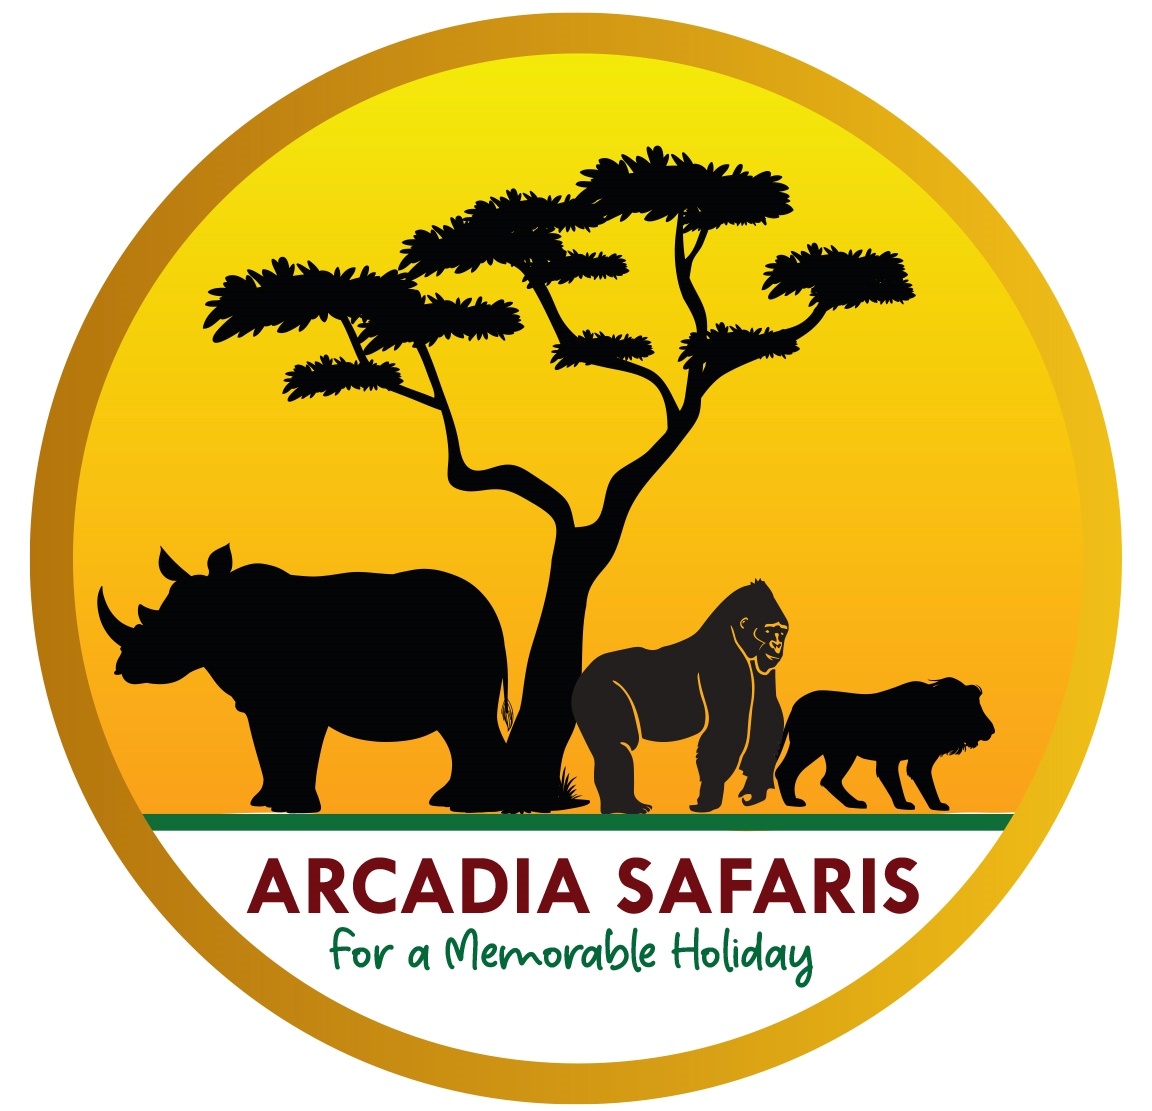 https://safariopedia.com/uploads/operator/logo/669c77f0ace8bArcadia safaris logo-2 Safari Opedia.jpg